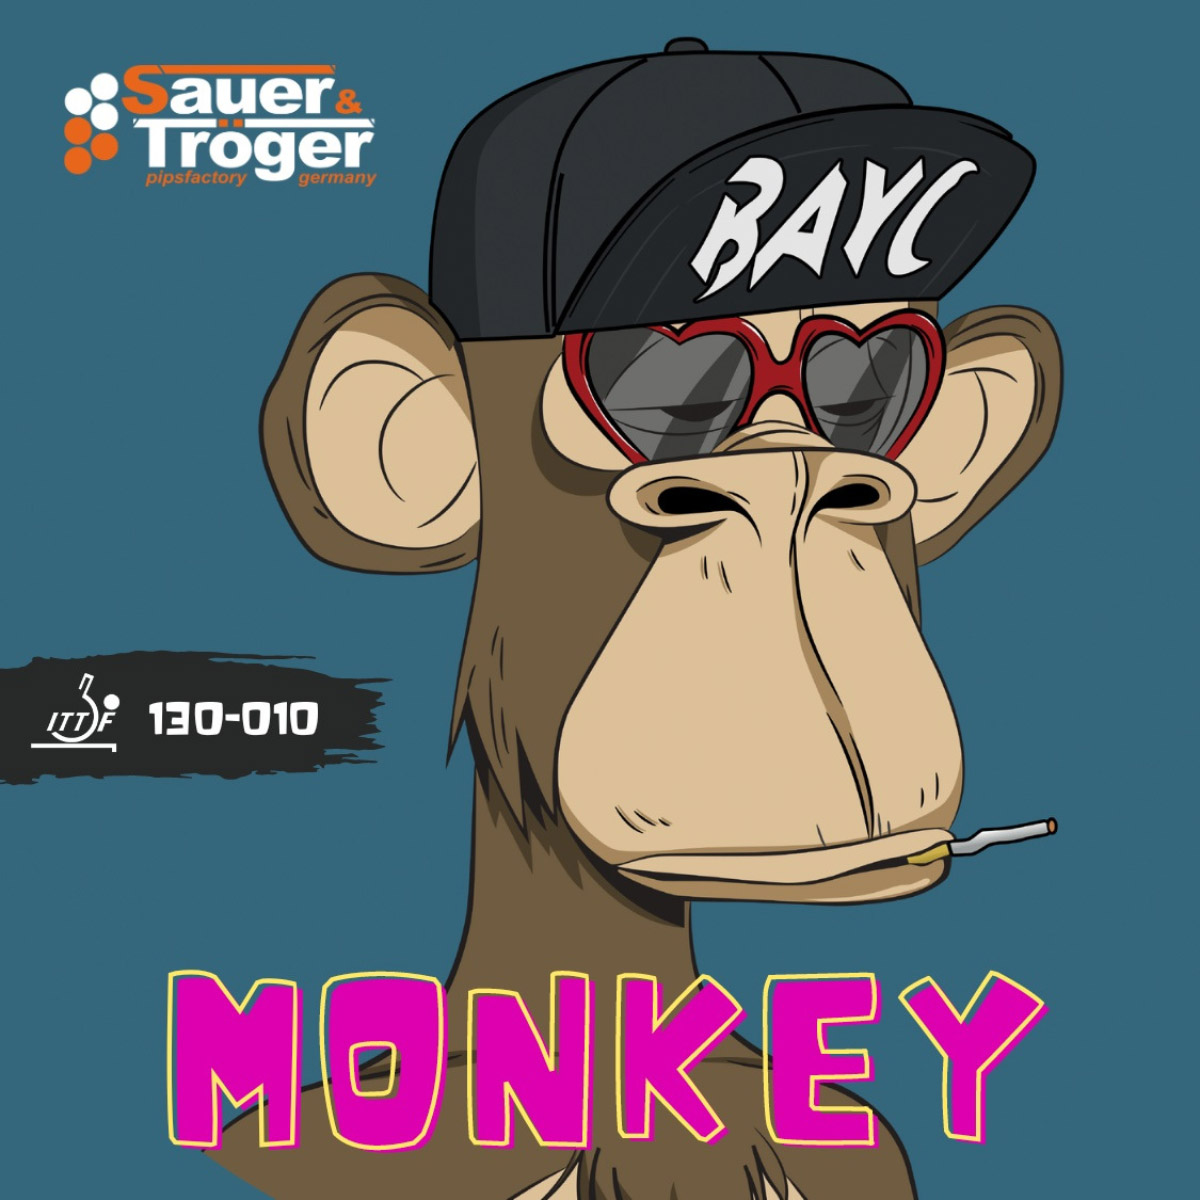 Sauer & Tröger Belag Monkey